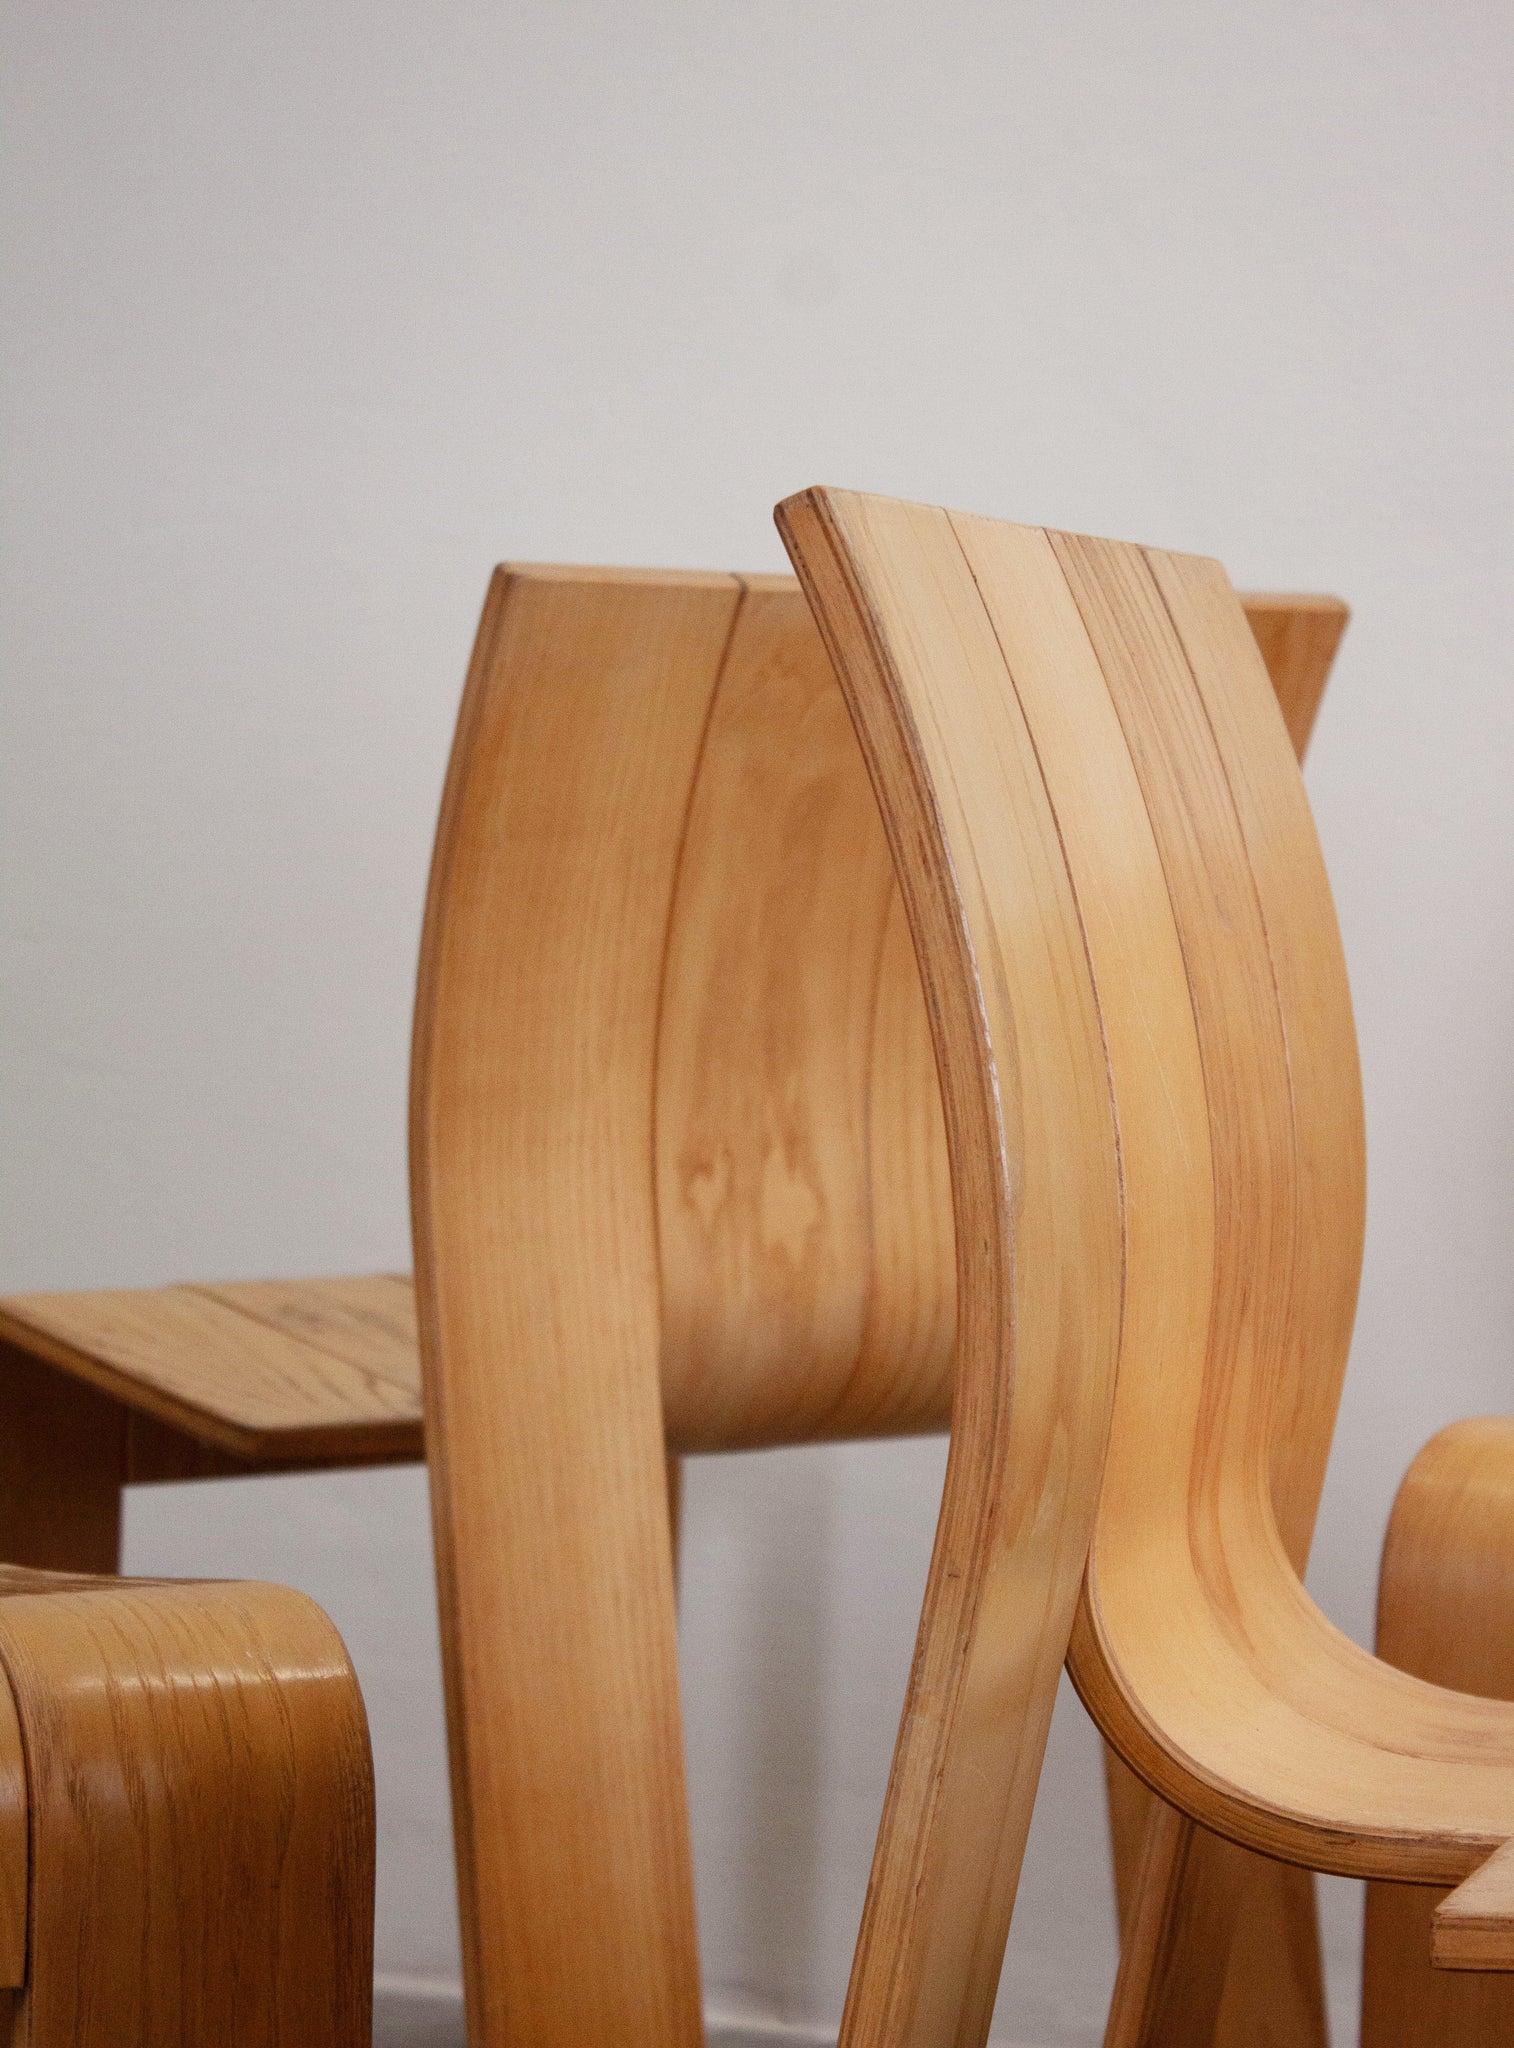 Castelijn Strip Chairs by Gijs Bakker (Set of 4)